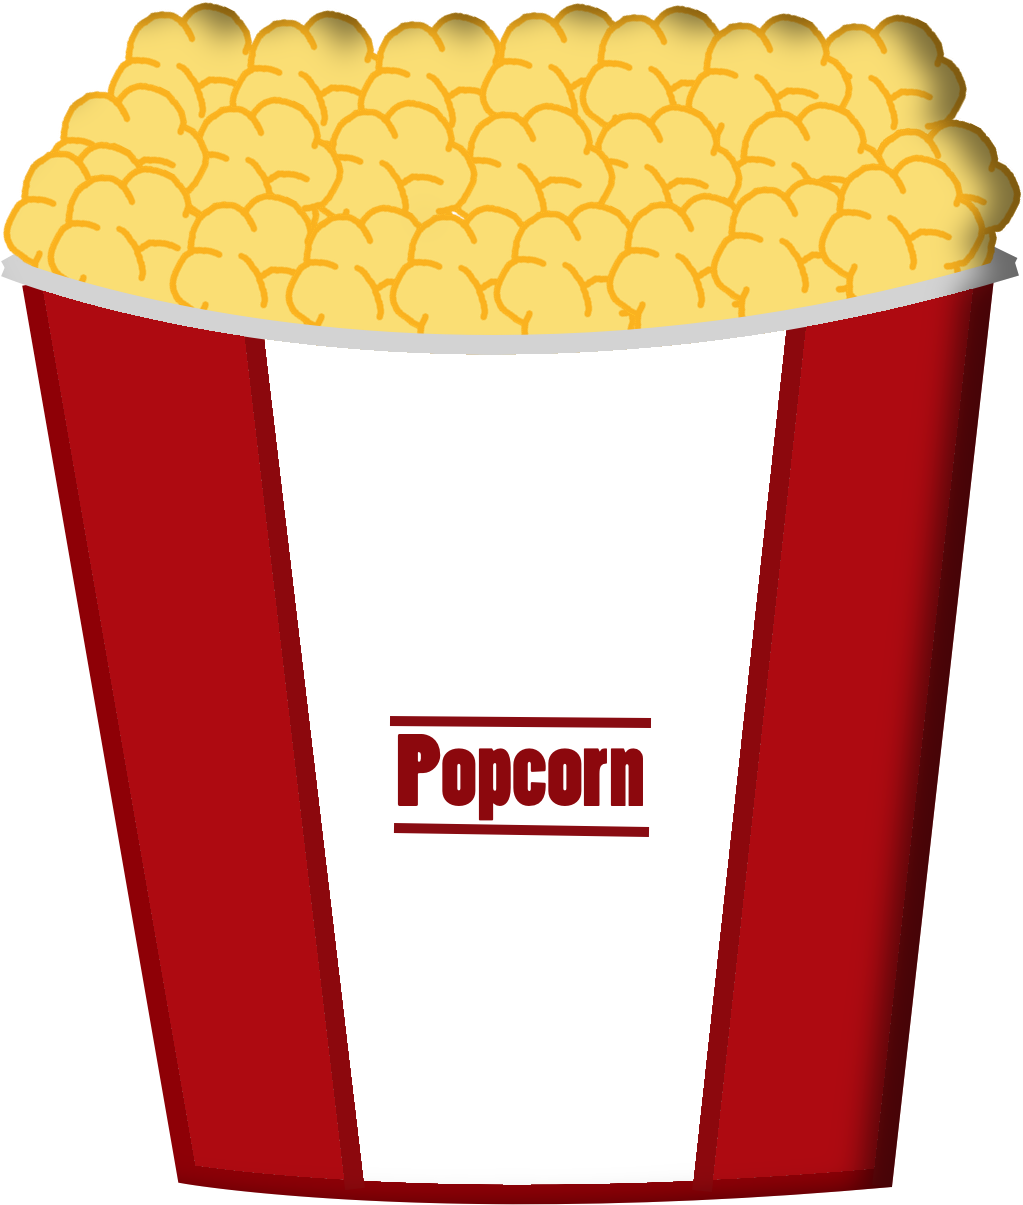 Popcorn Png - Popcorn .png (1023x1205)